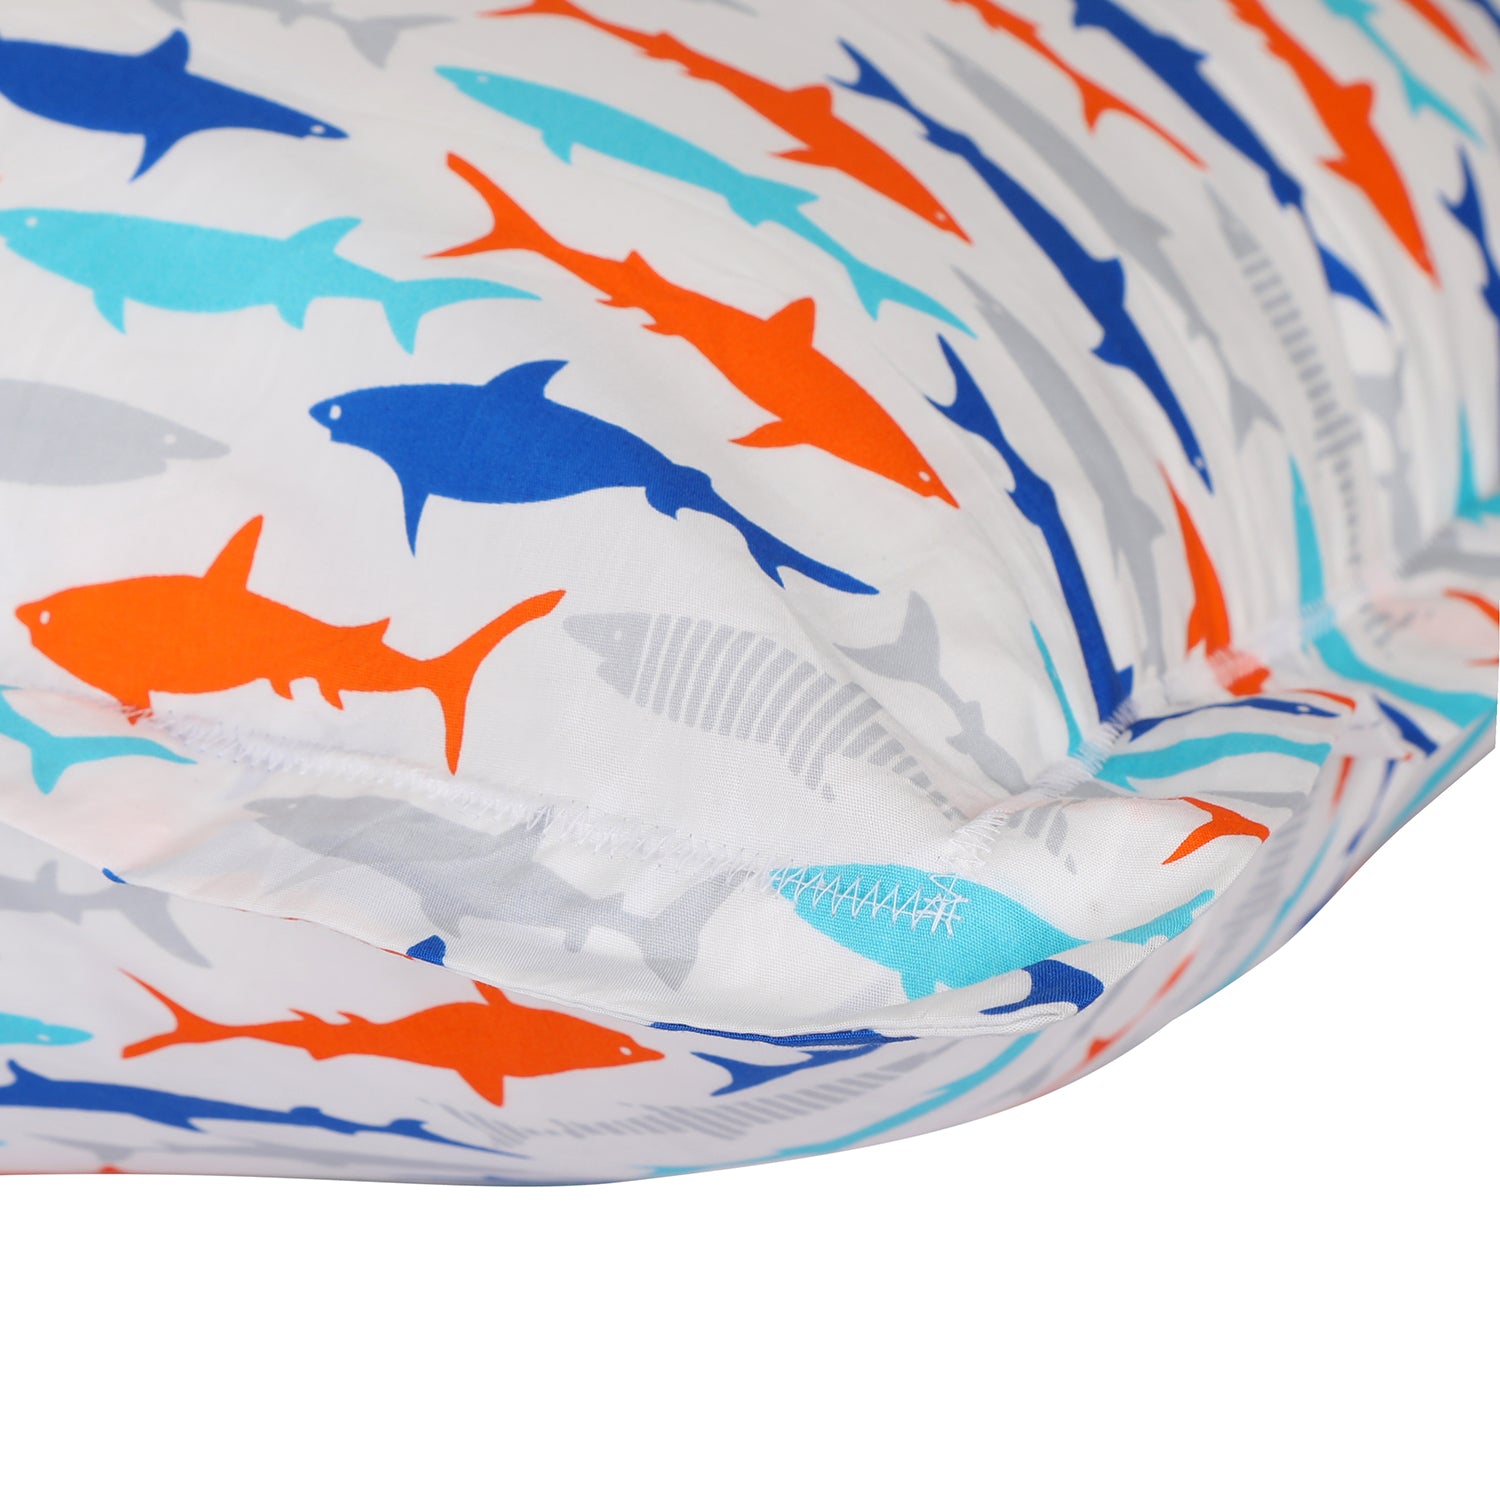 Bedsheet Set - Shark Bedsheet, Single/Double Bed Sizes Available